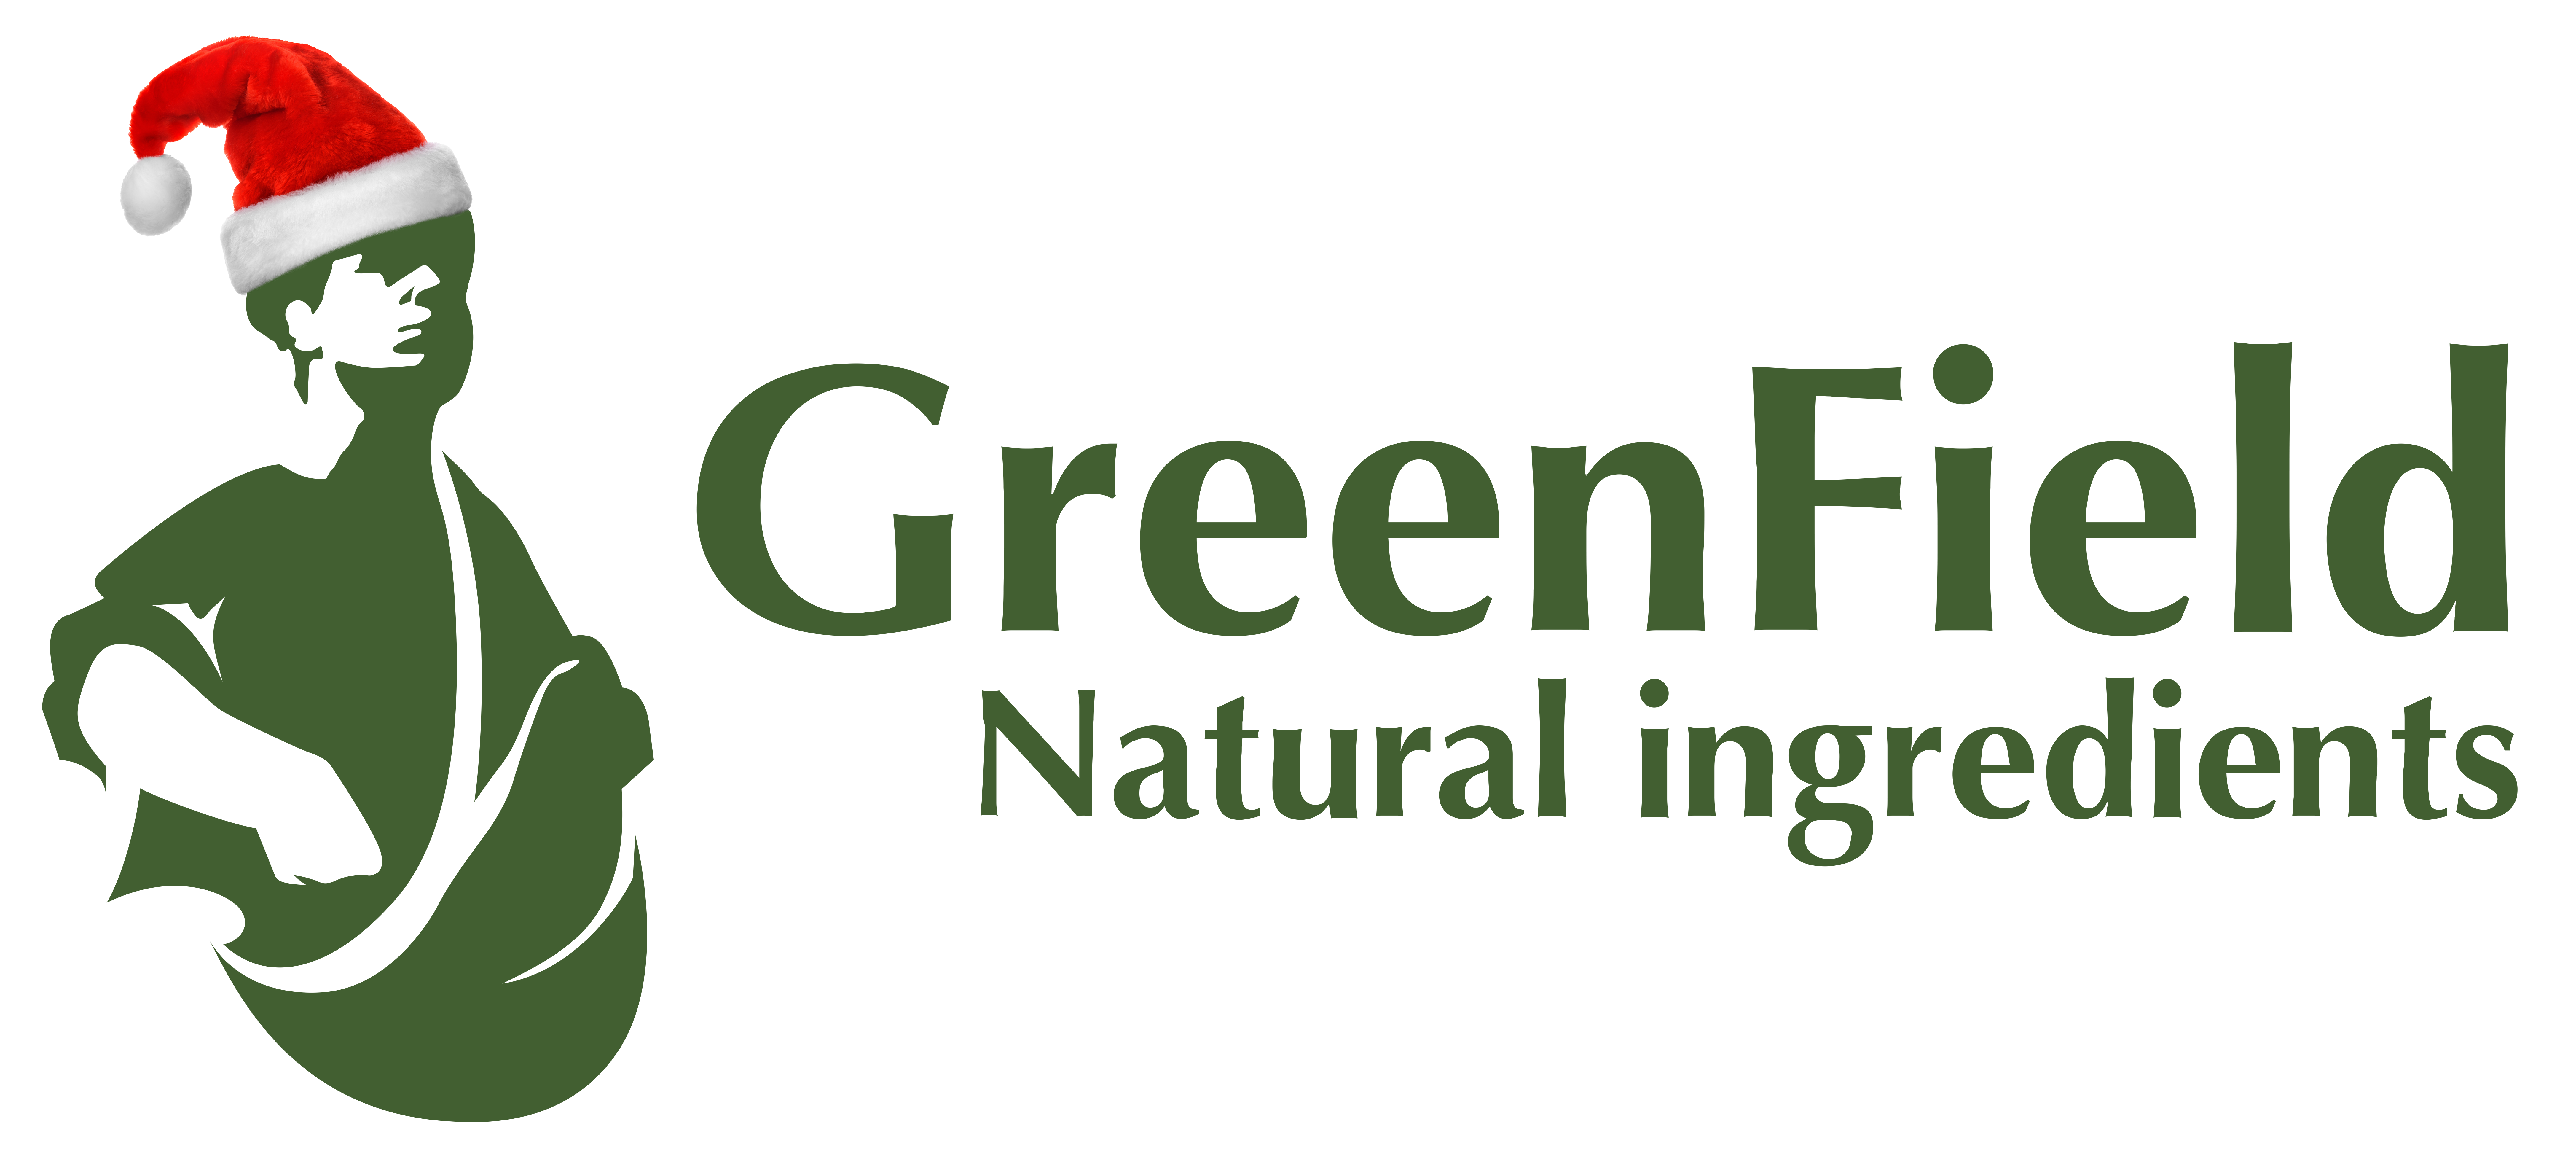 Greenfield - NATURAL INGREDIENTS